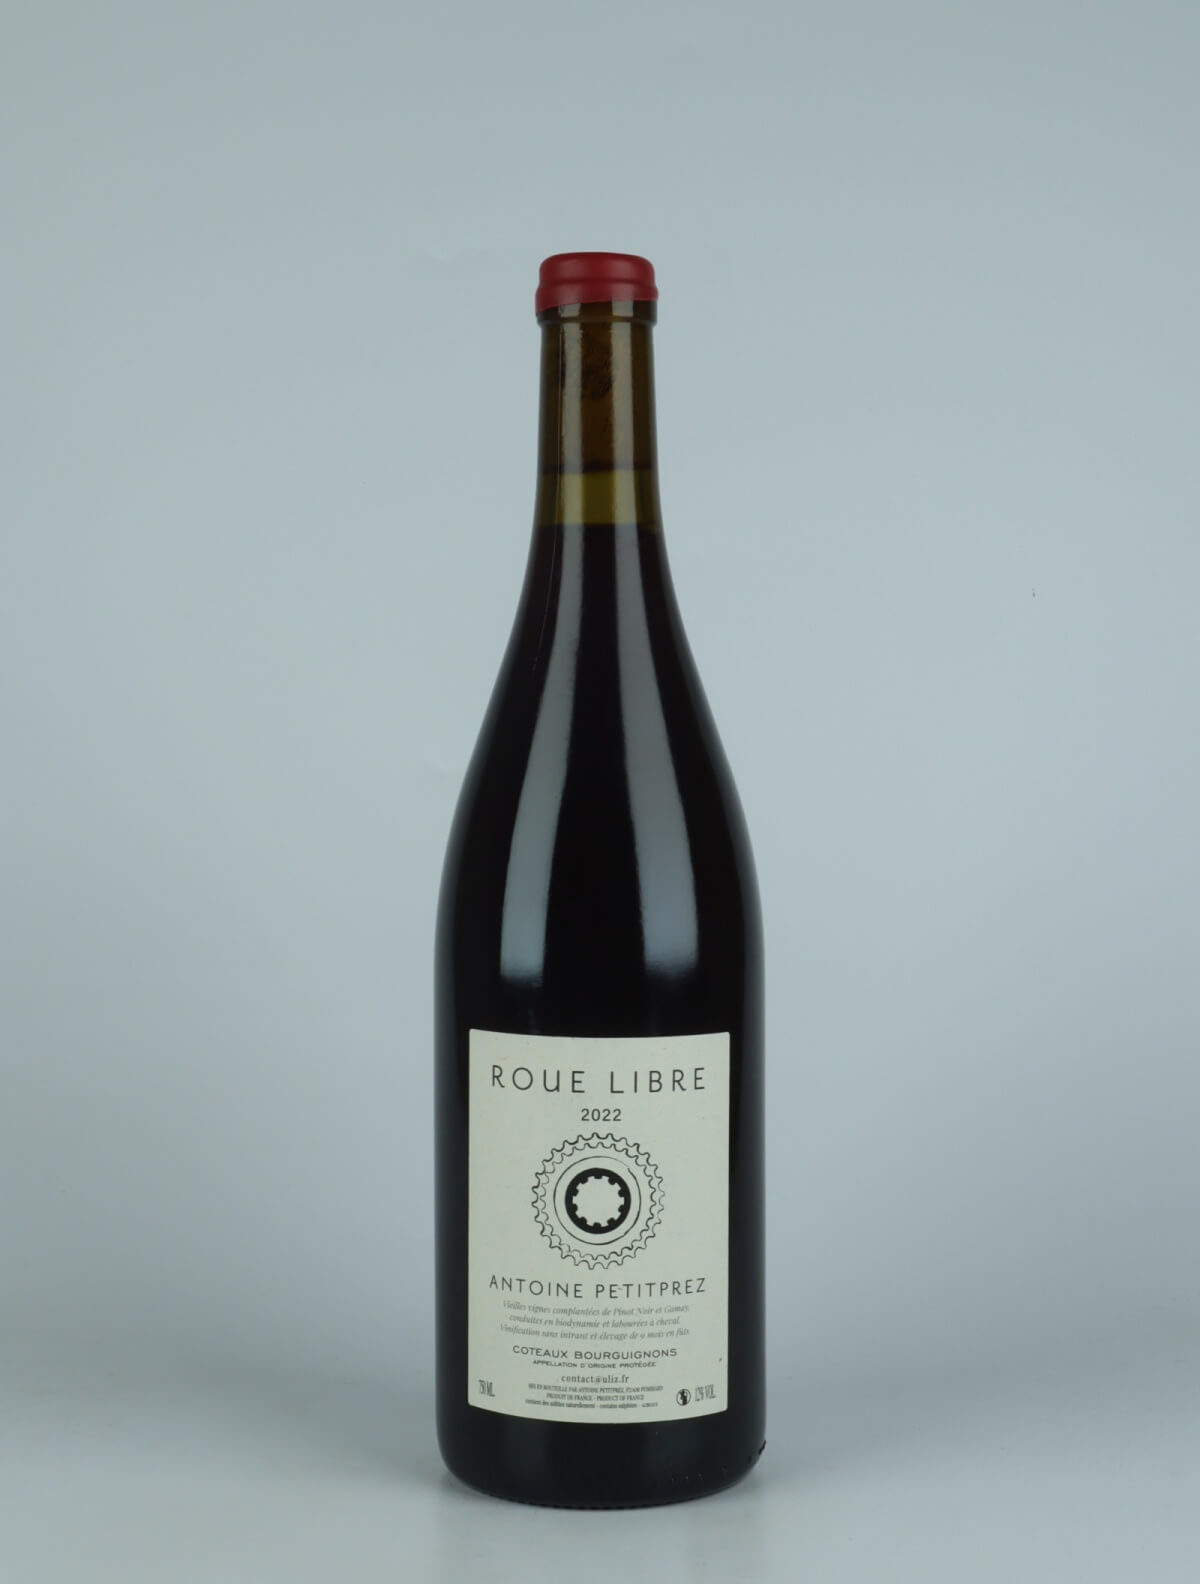 A bottle 2022 Coteaux Bourguignons - Roue Libre Red wine from Antoine Petitprez, Burgundy in France